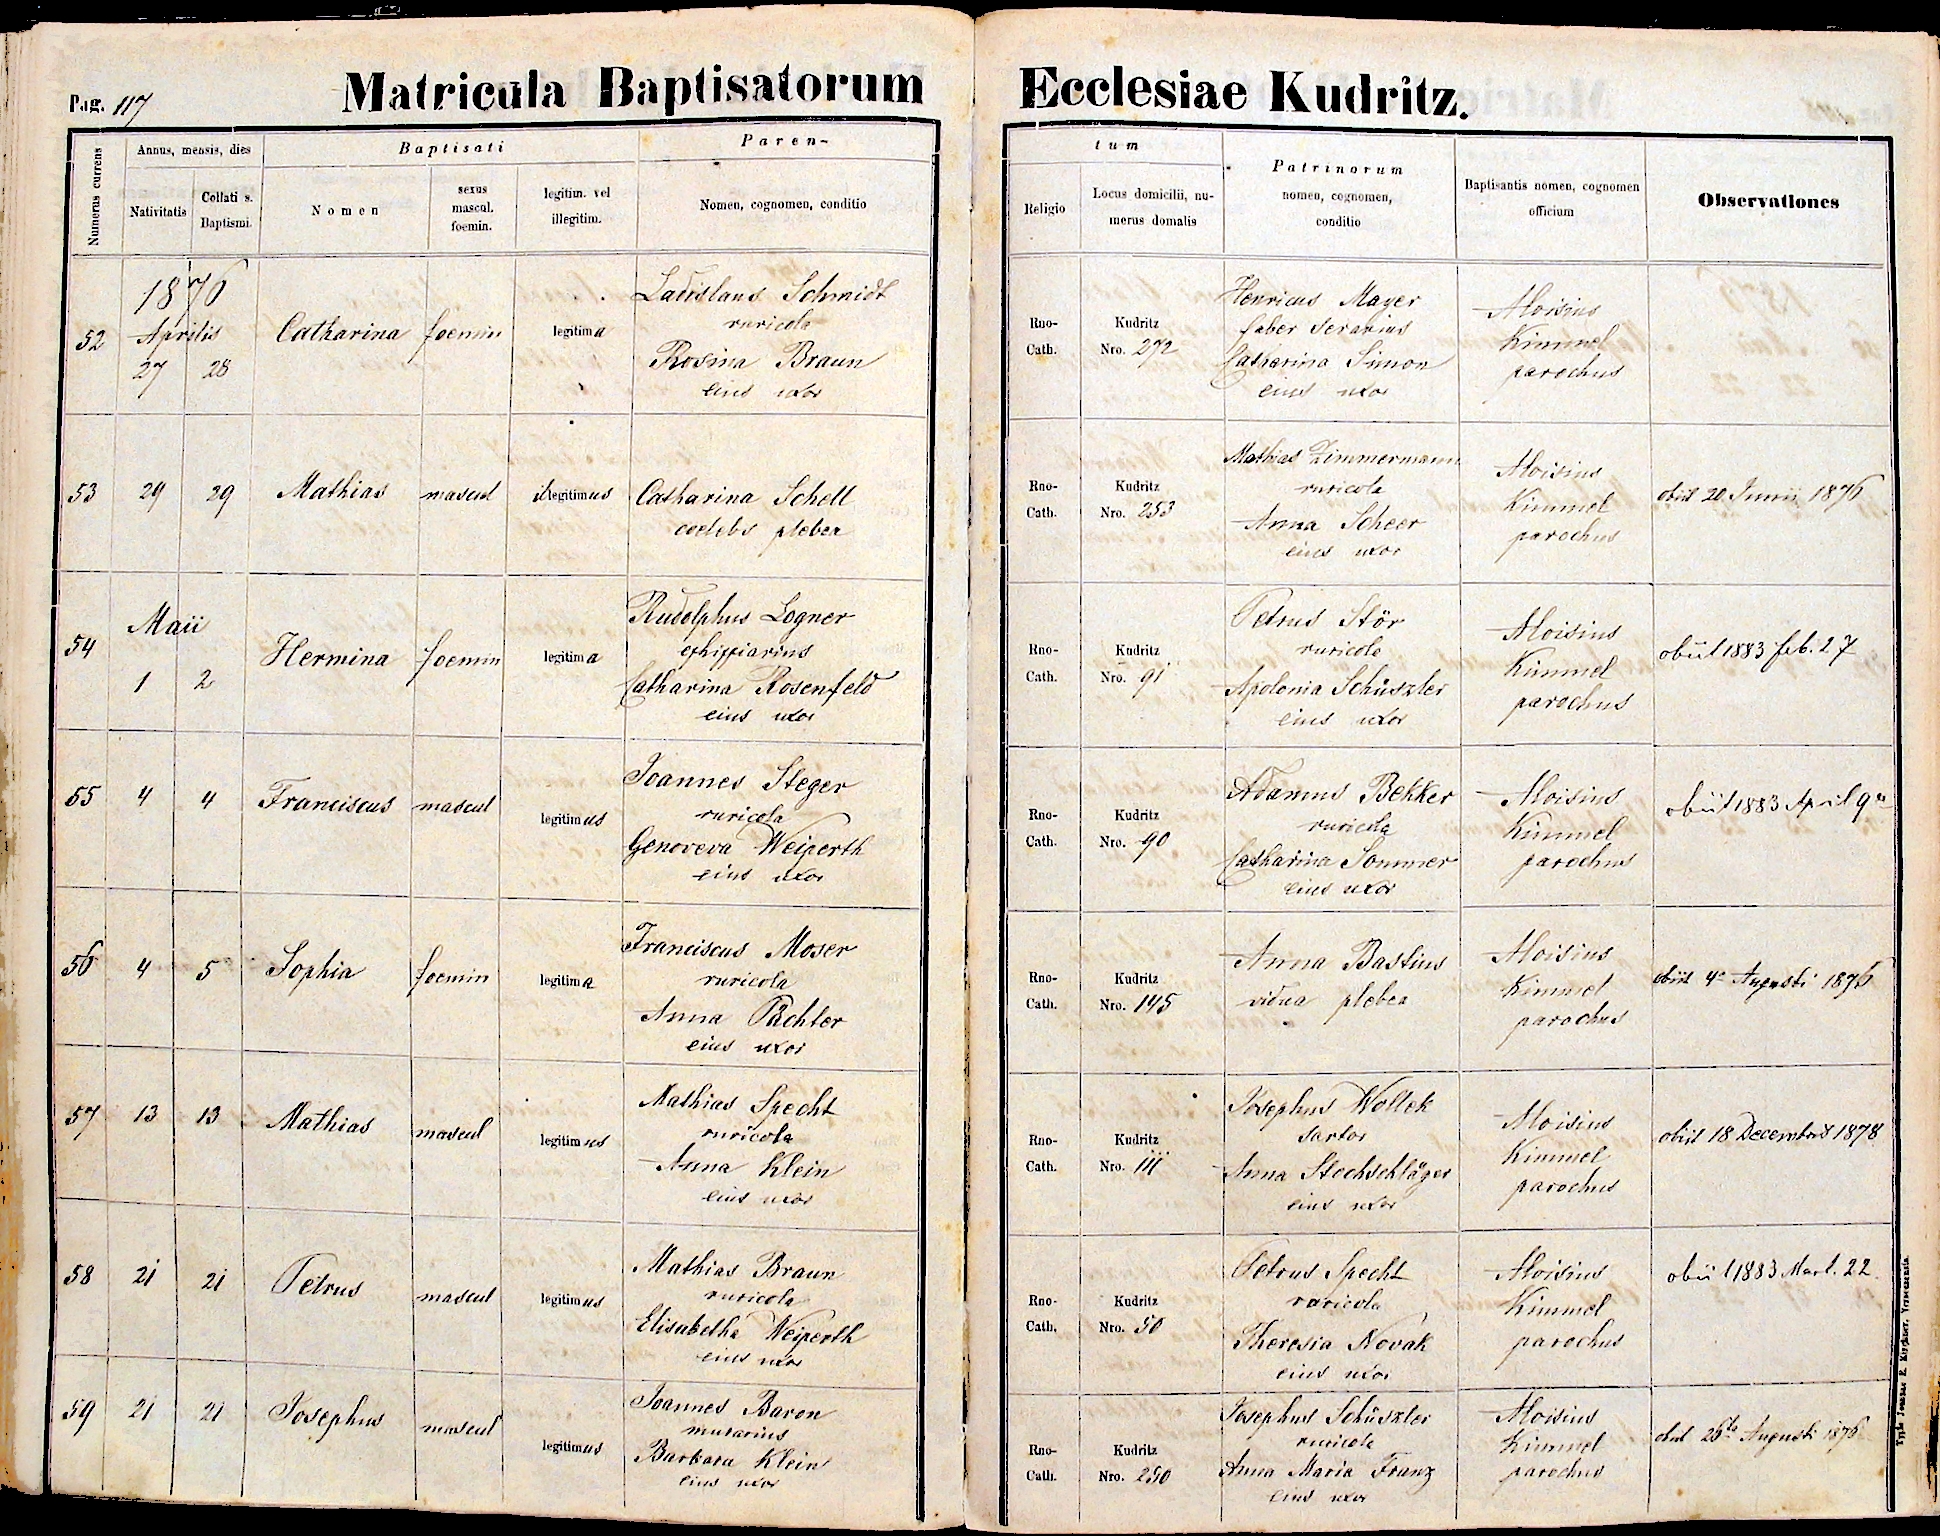 images/church_records/BIRTHS/1884-1899B/1891/117